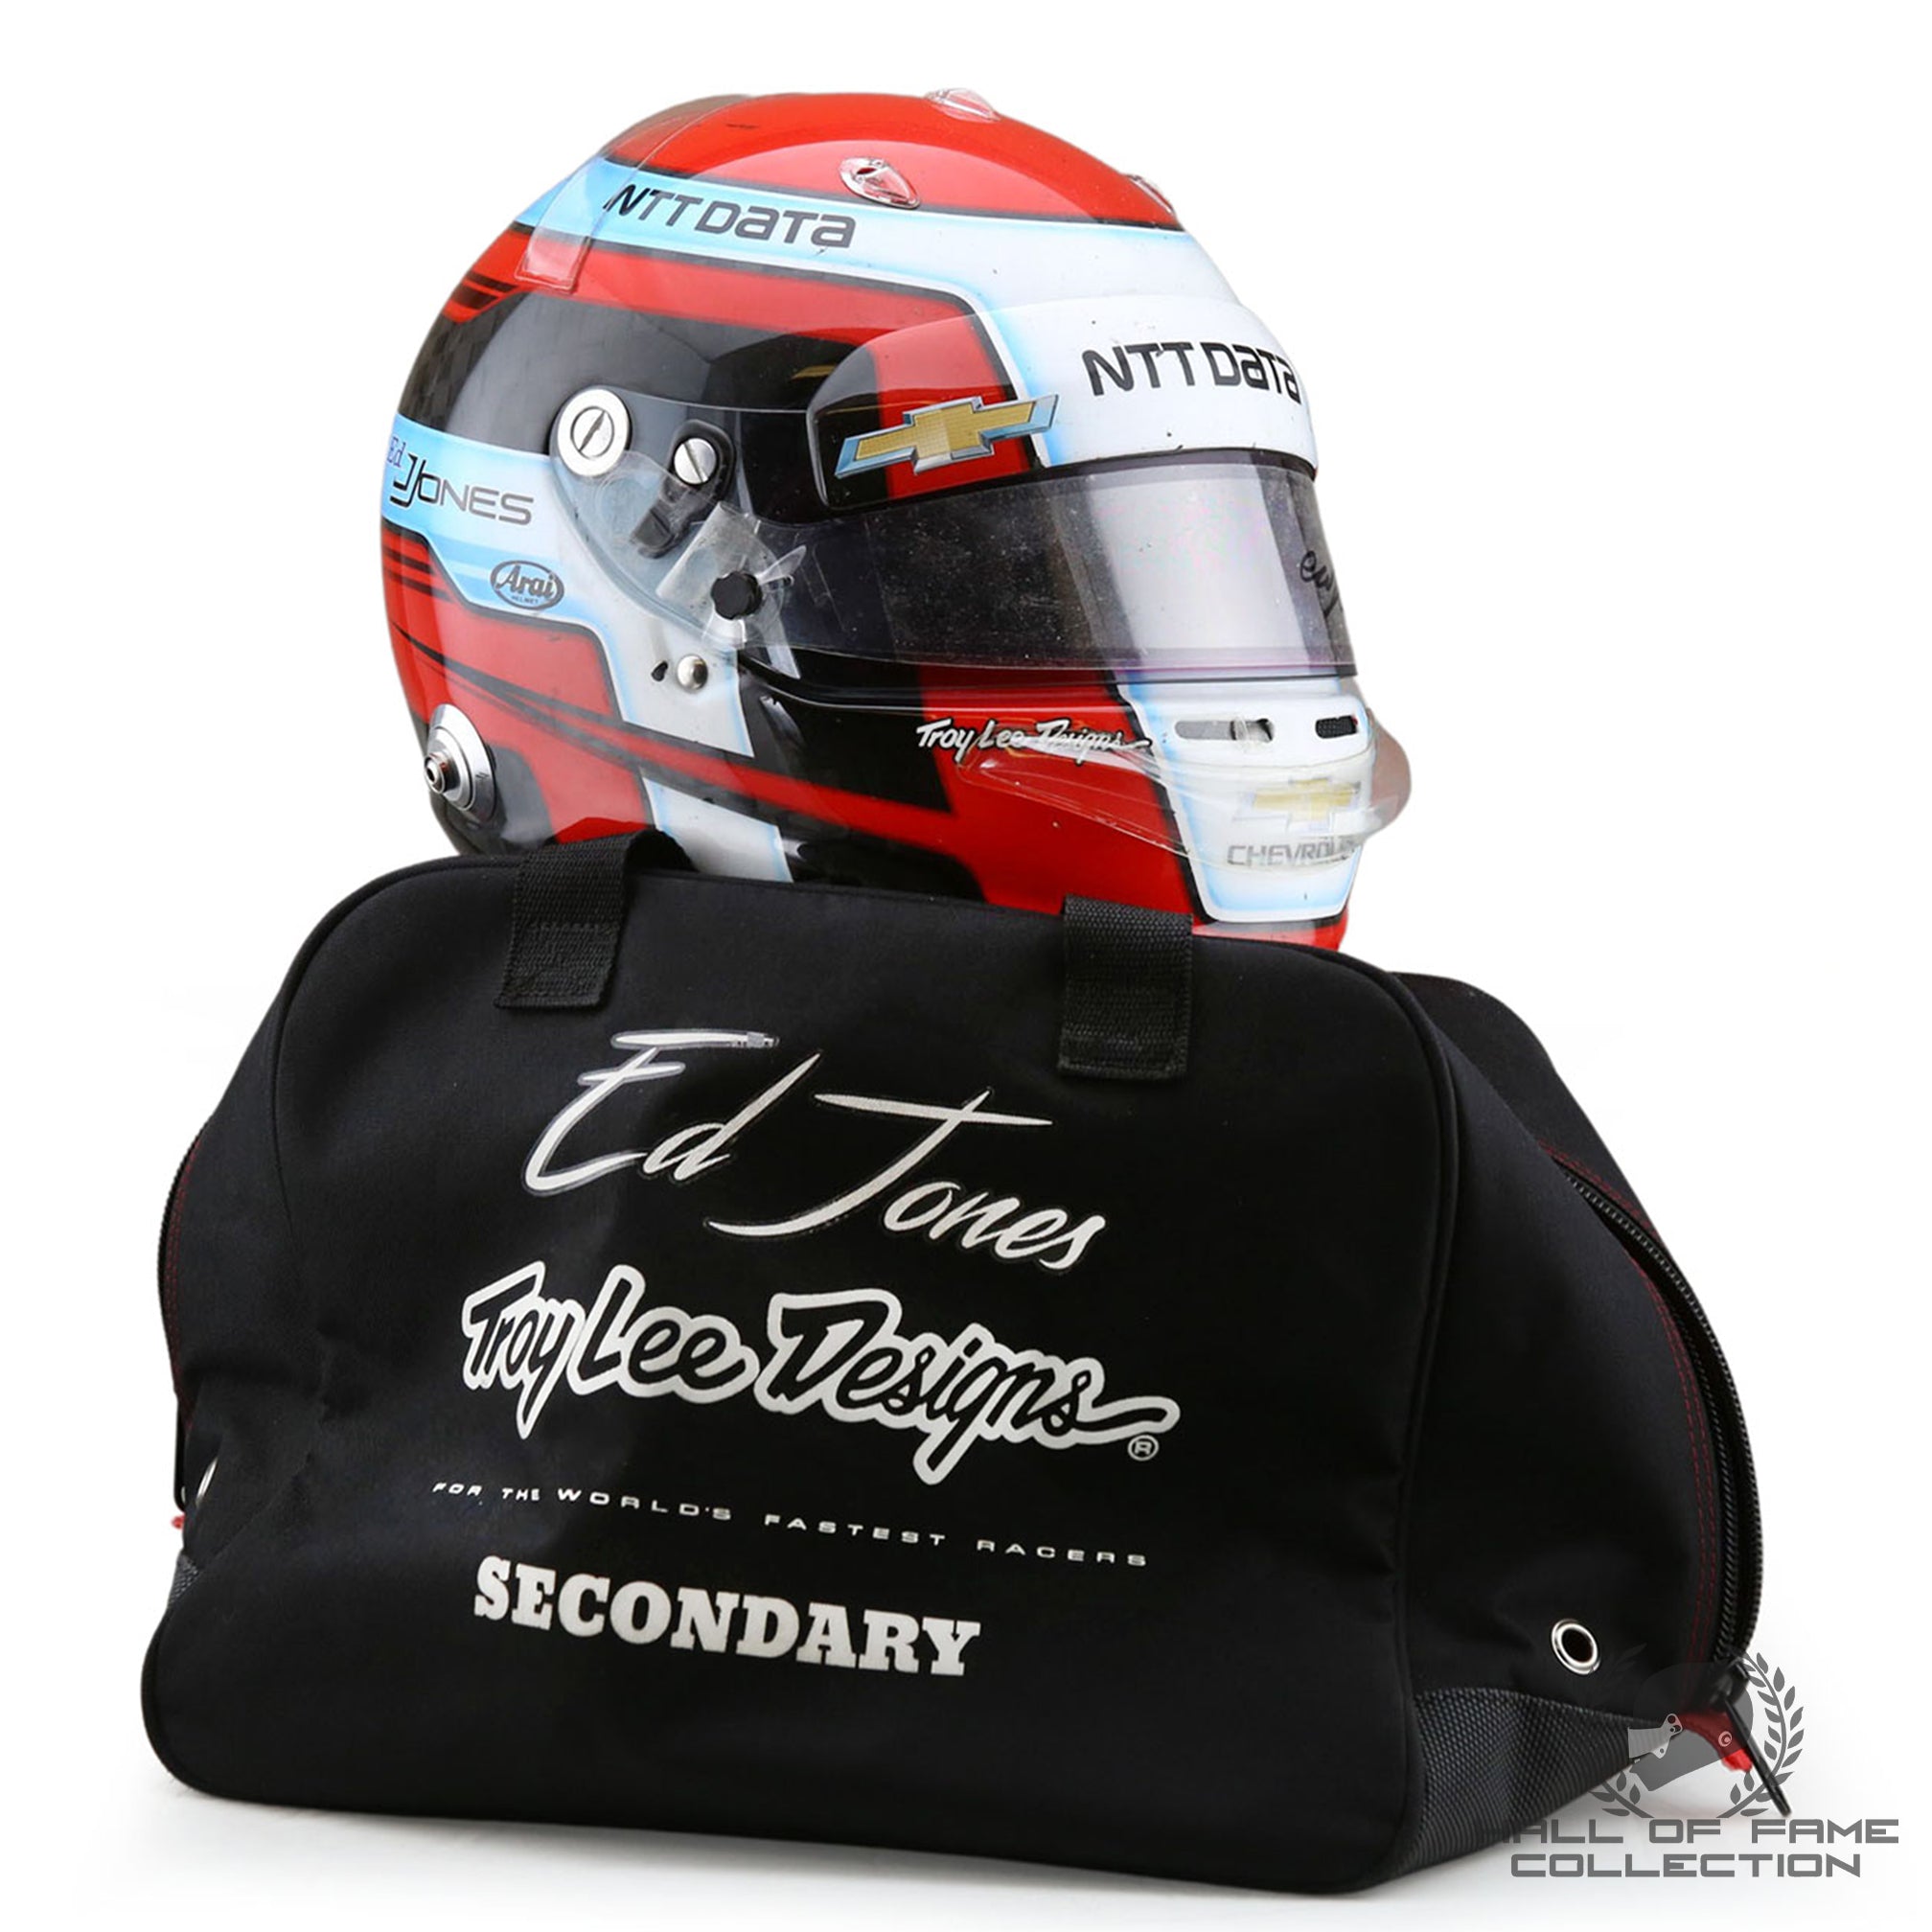 2019 Ed Jones Signed Indy 500 Used Ed Carpenter Racing Scuderia Corsa IndyCar Helmet